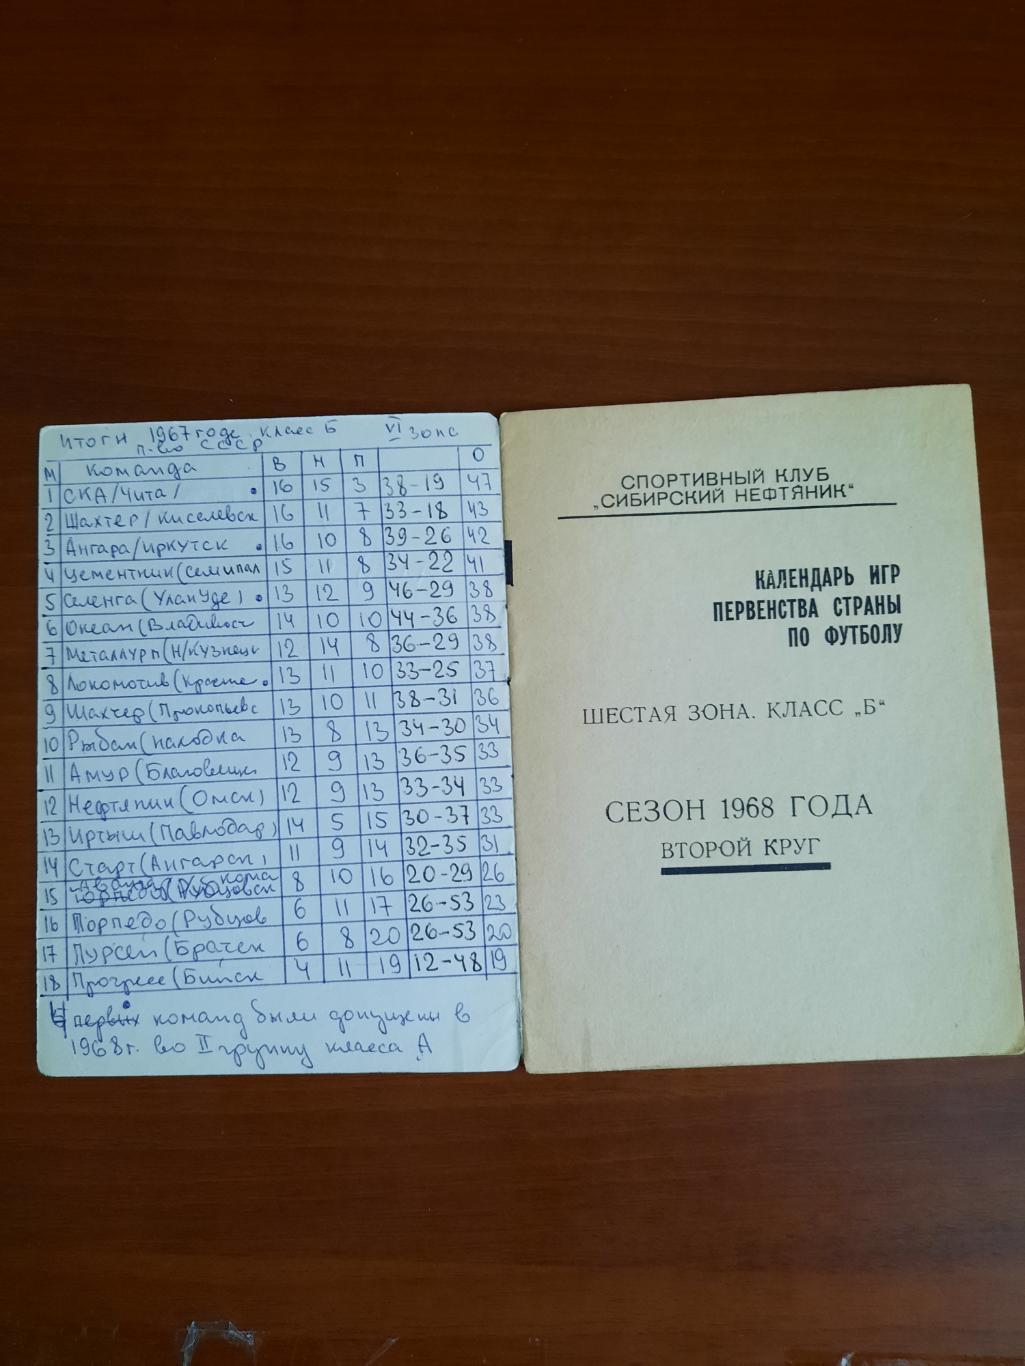 Омск 1968 Календарь игр класса Б 1